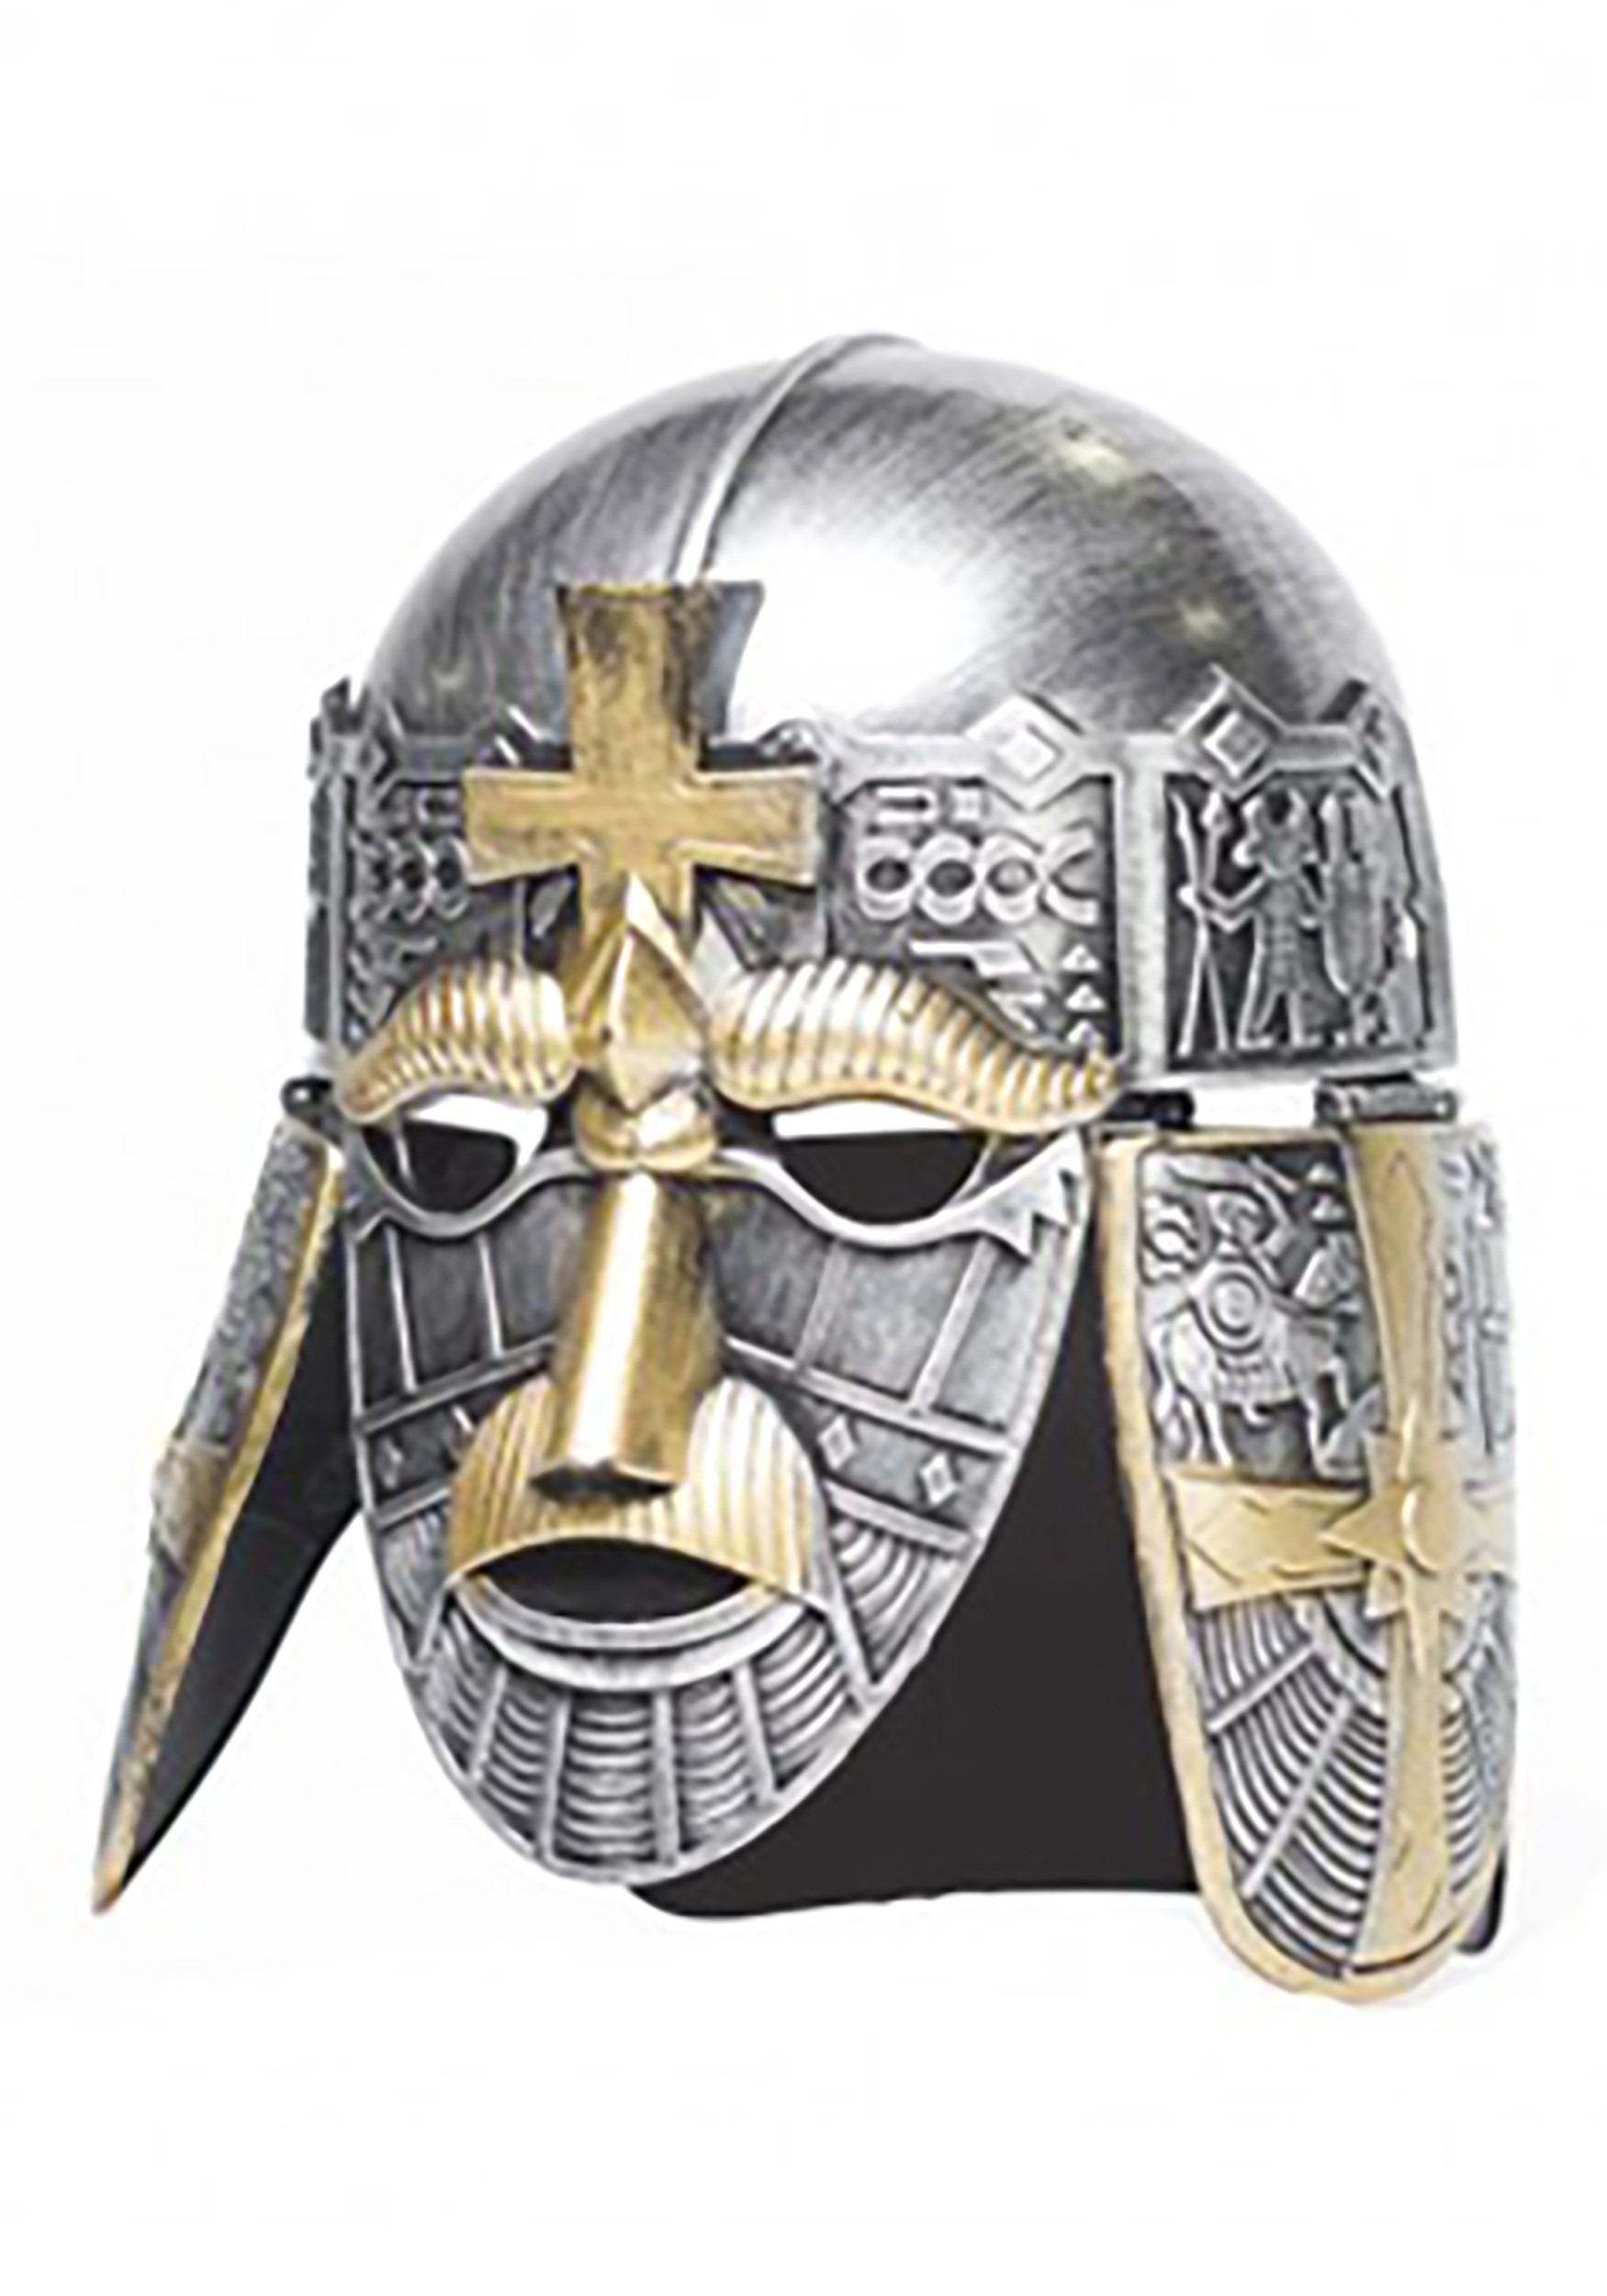 Silver Adult Crusader Costume Helmet